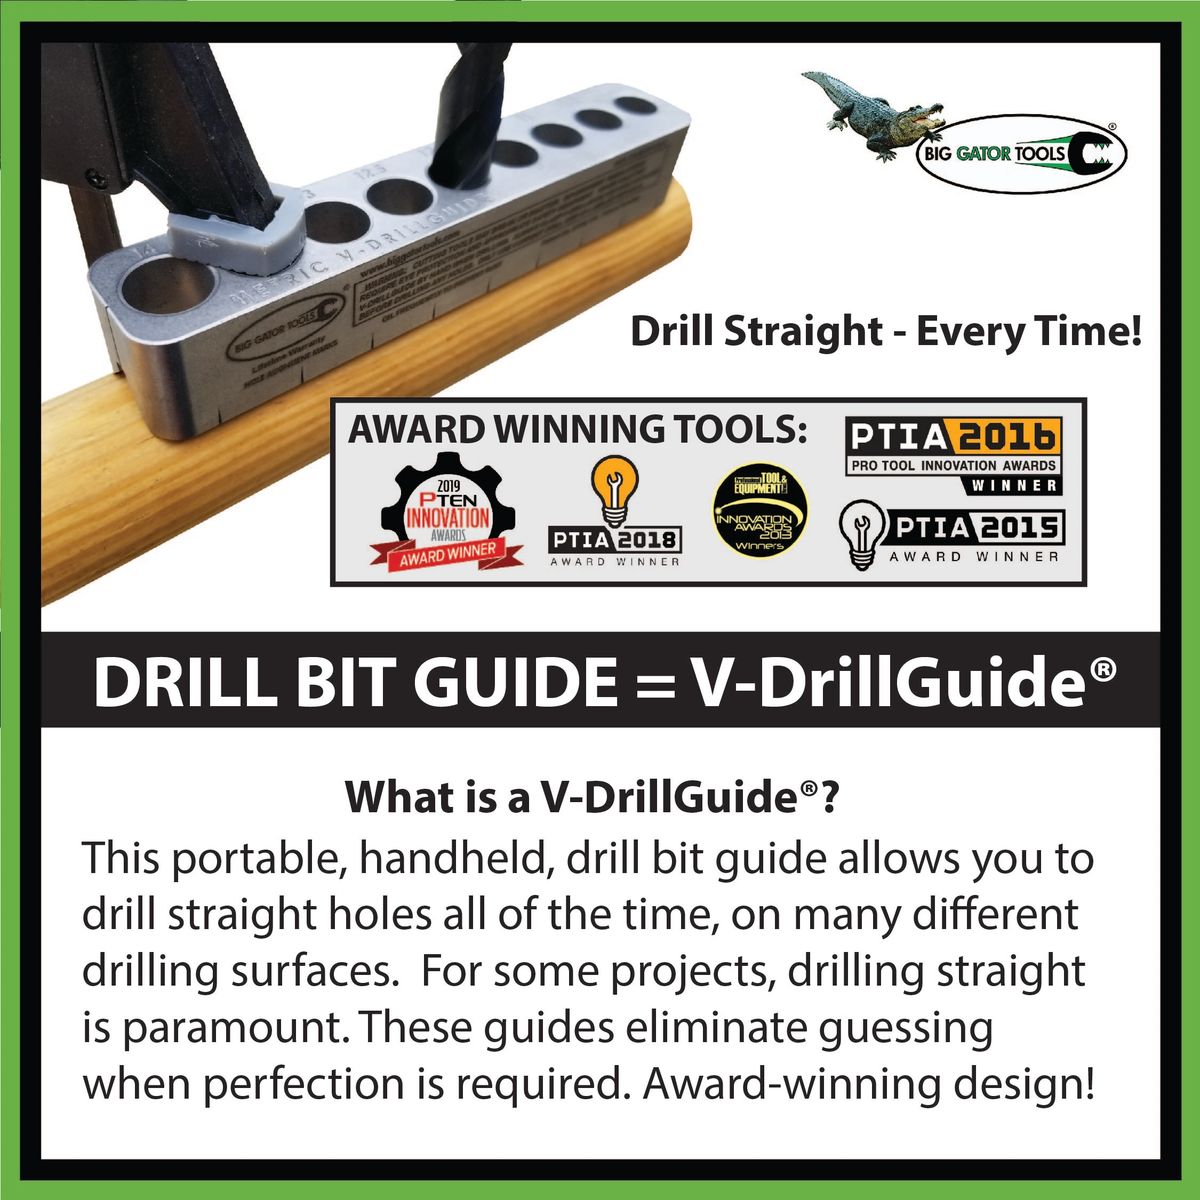 Big Gator Tools Gift Set- 2 tools, Engineering book, 2 carpenter